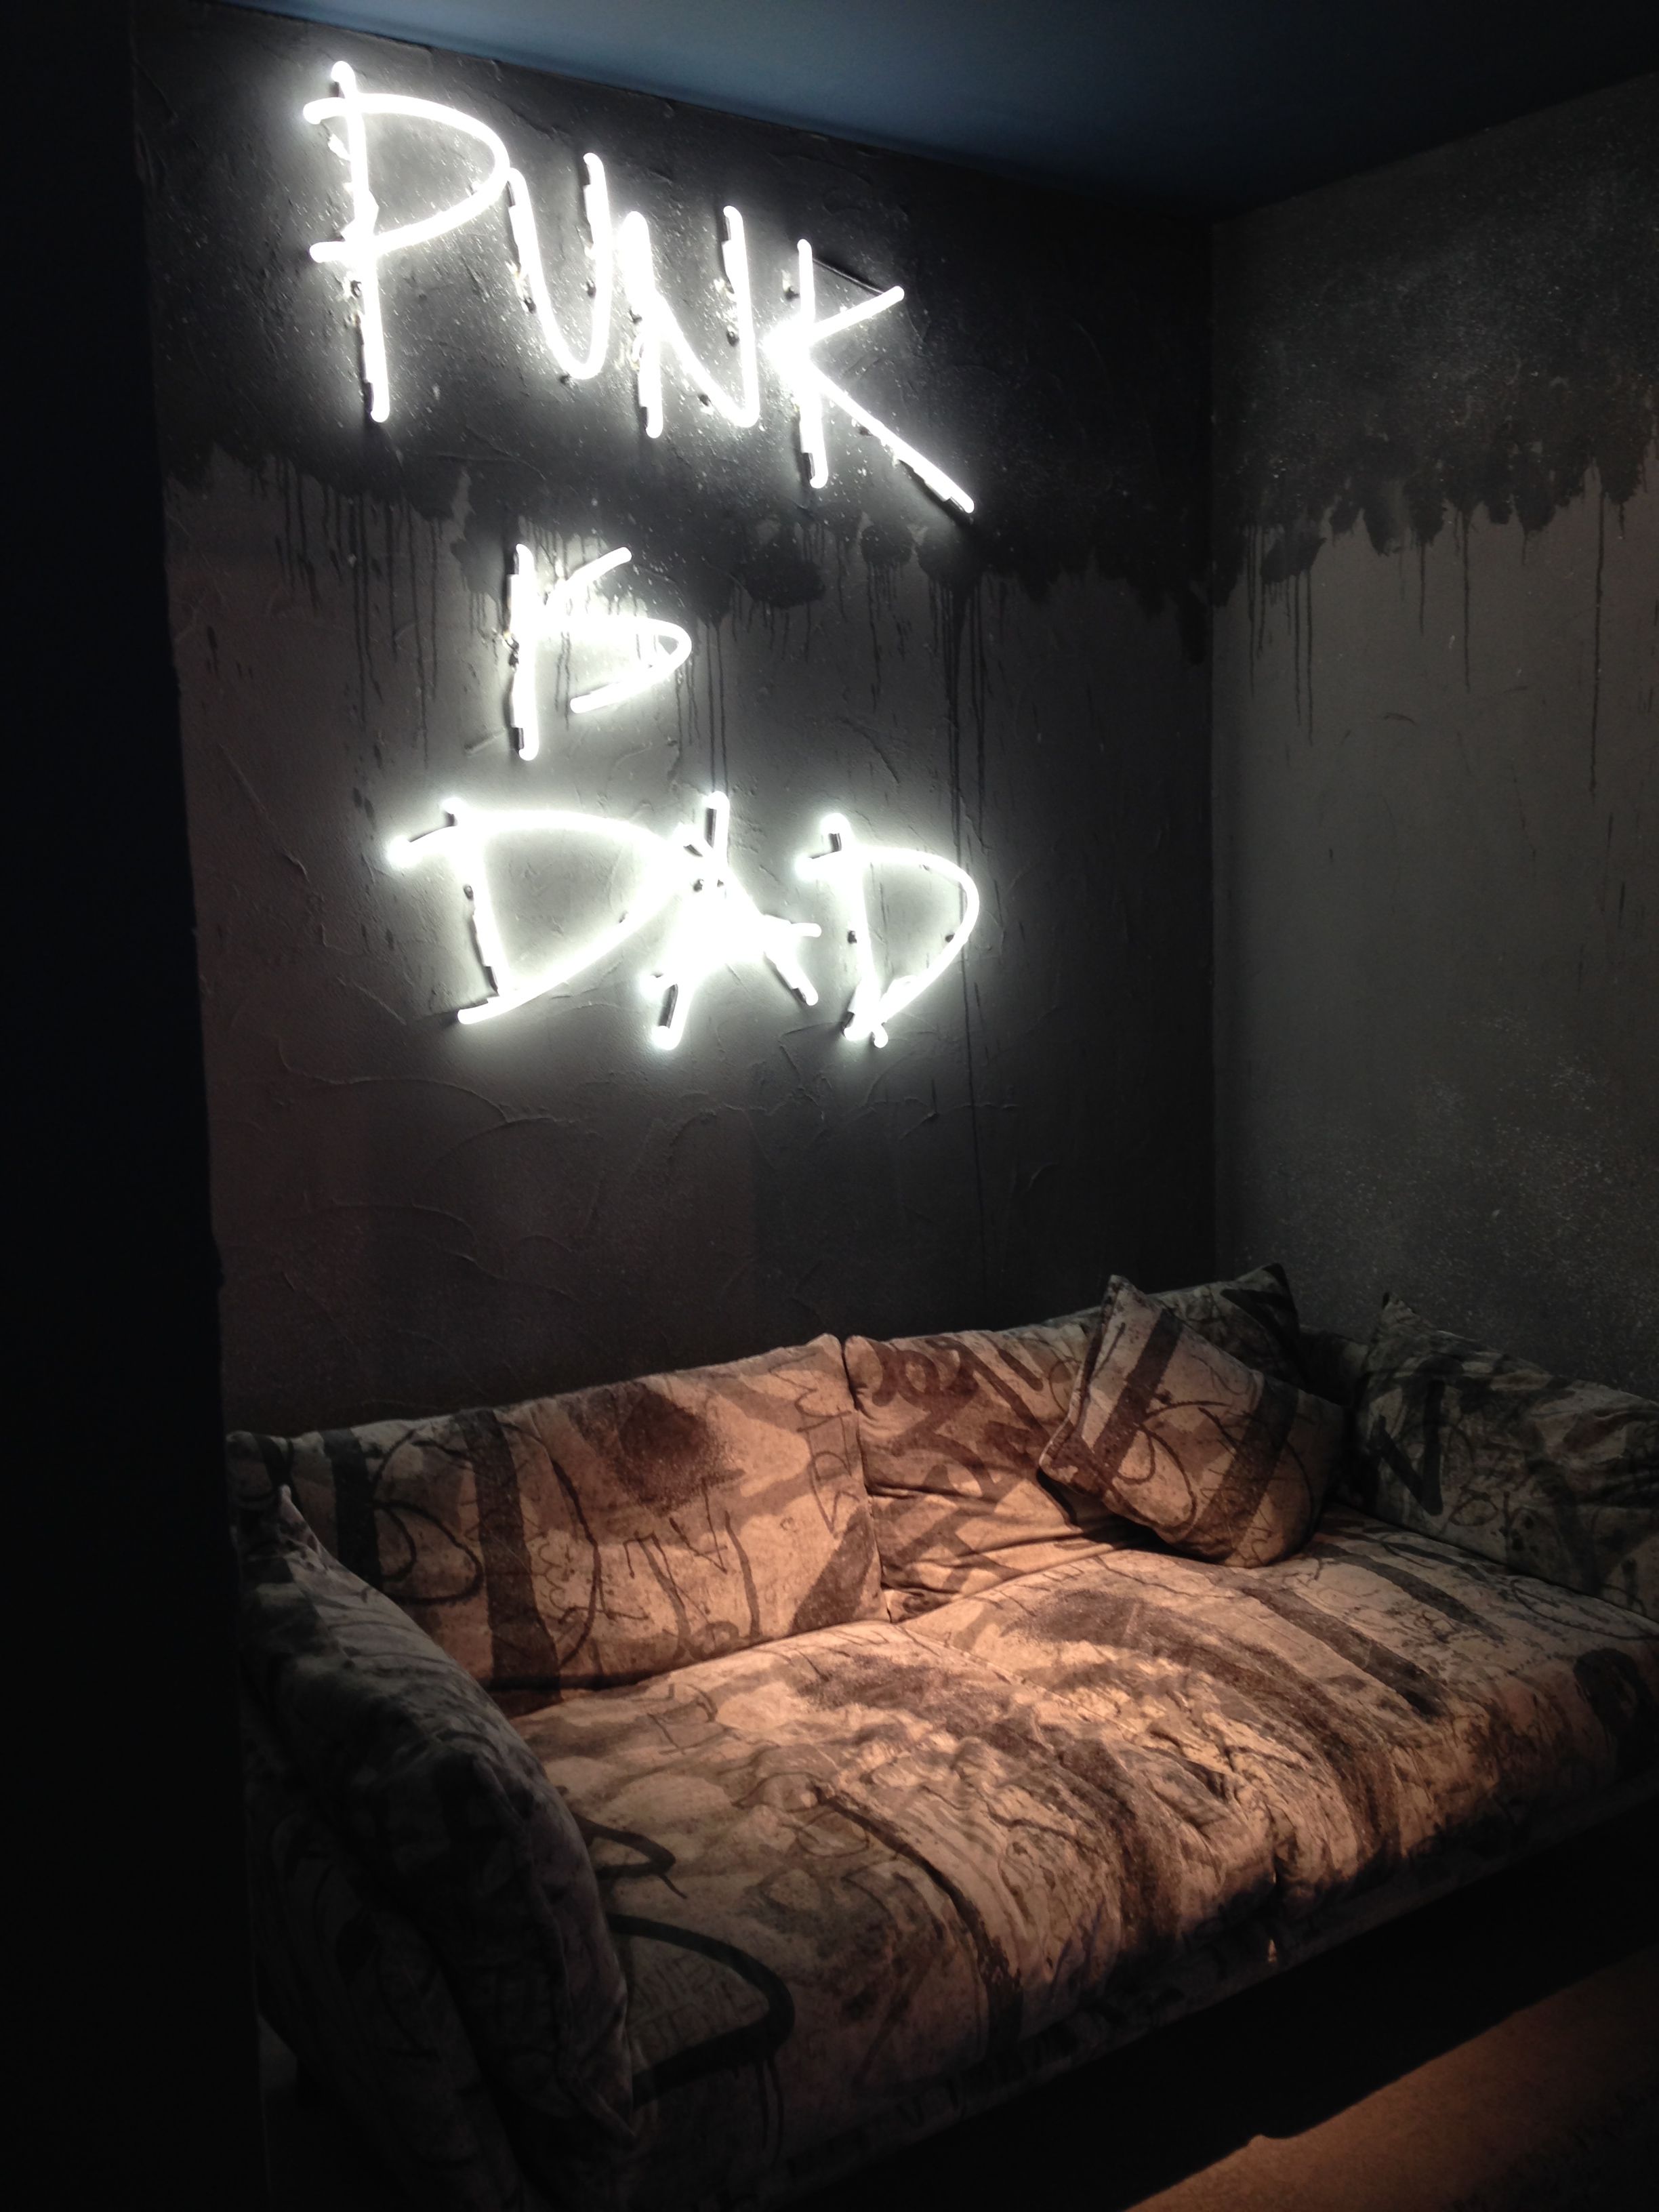 Punk is Dad - Diesel - iSaloni 2014